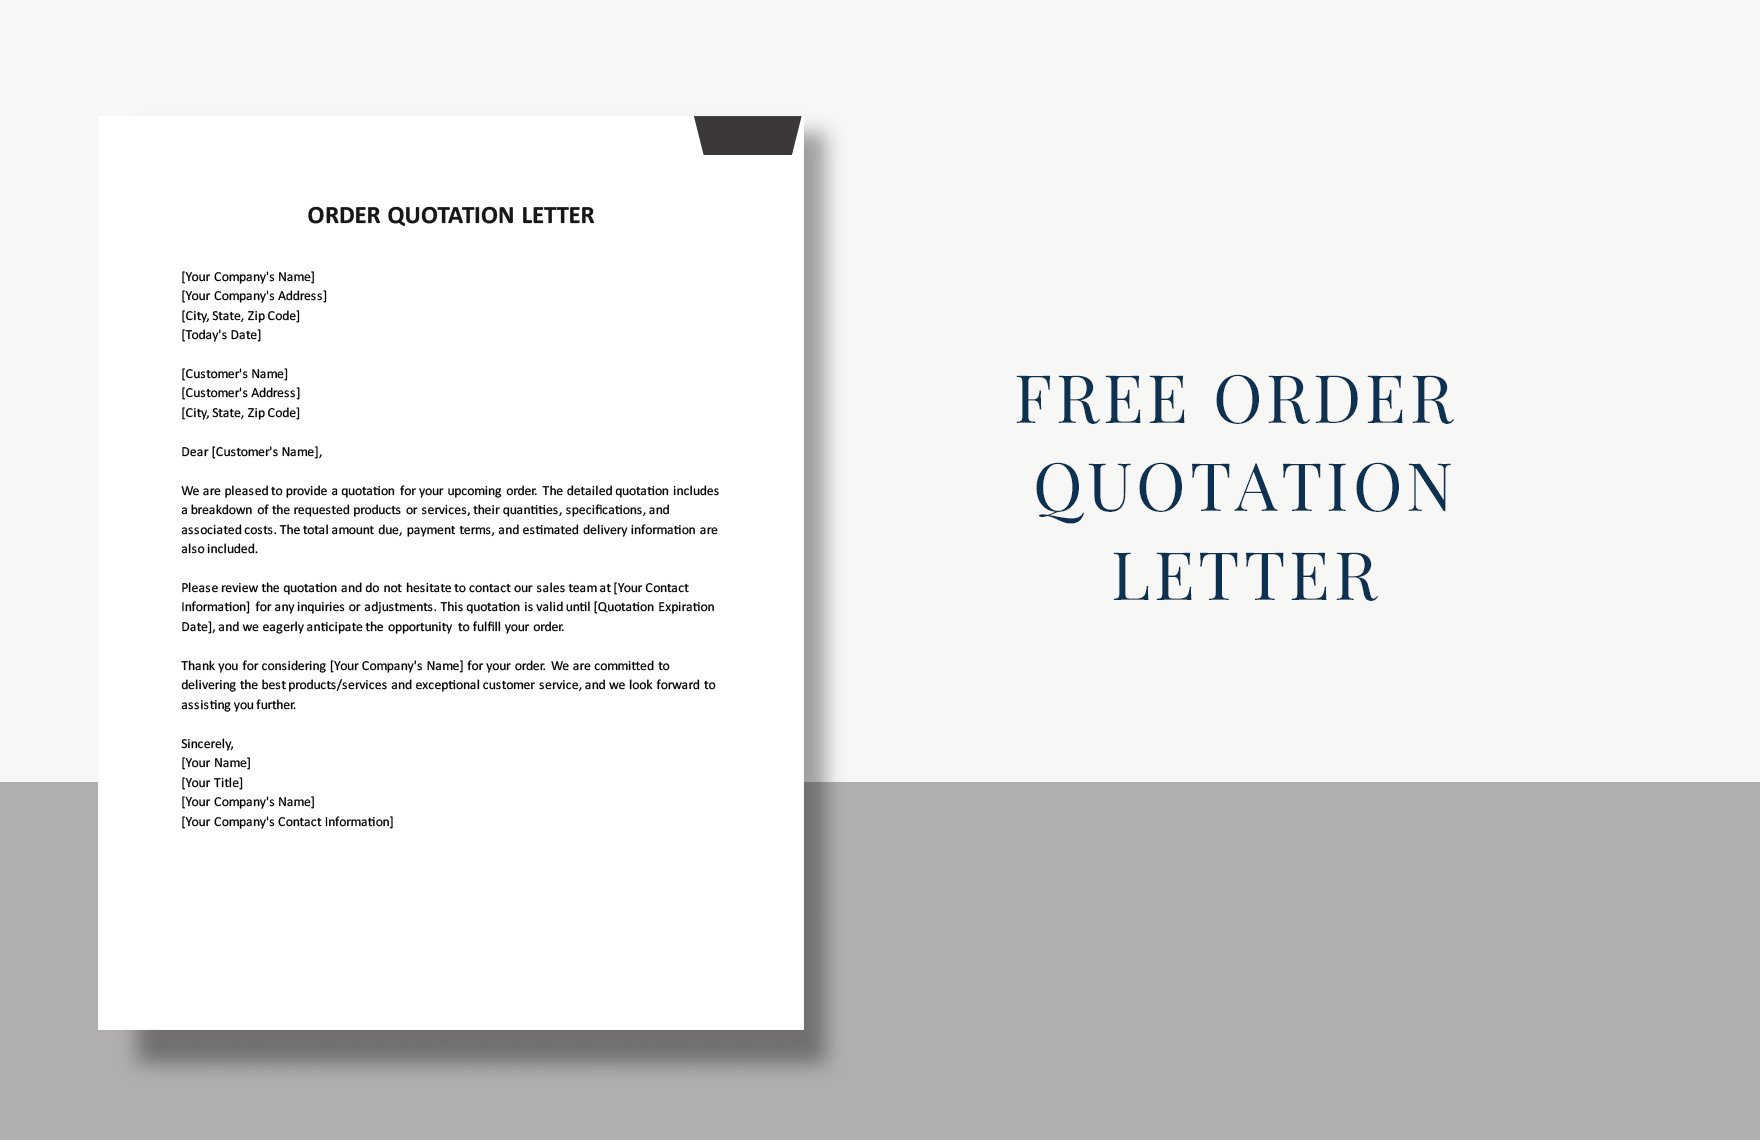 Order Quotation Letter